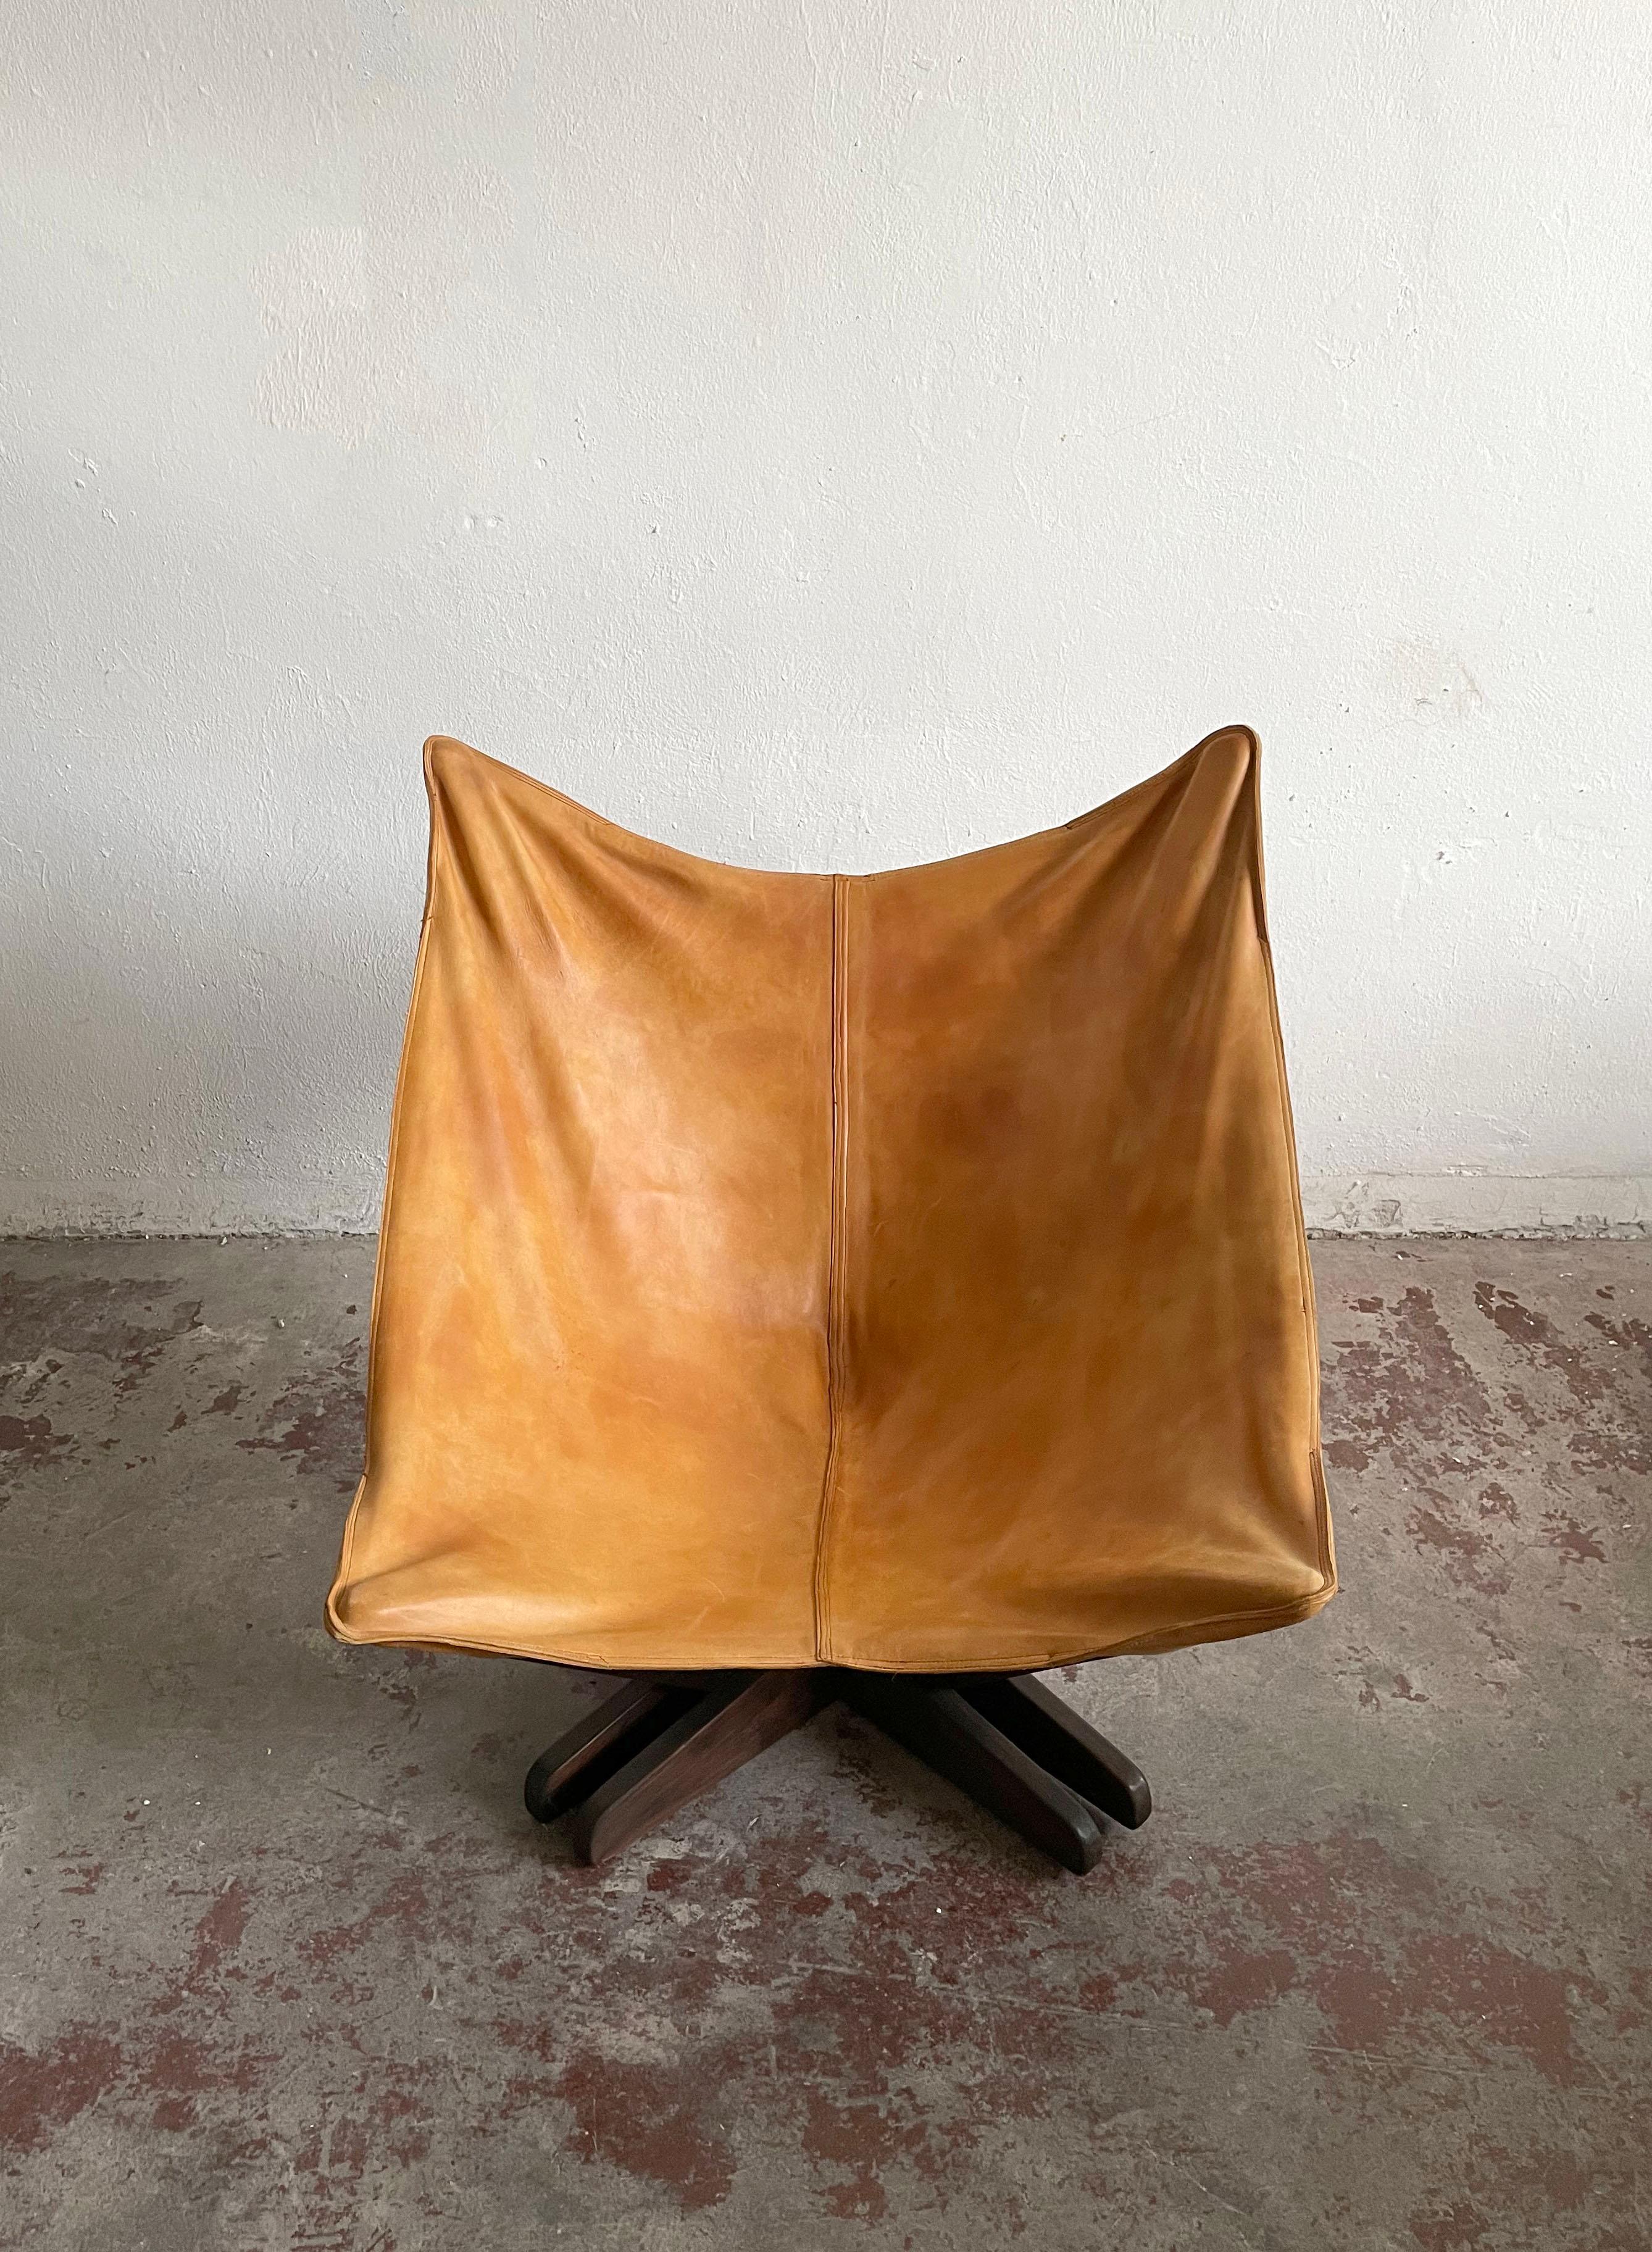 20th Century Mid-Century Modern Butterfly Leather Chair, Scandinavian Design, 1960s-1970s